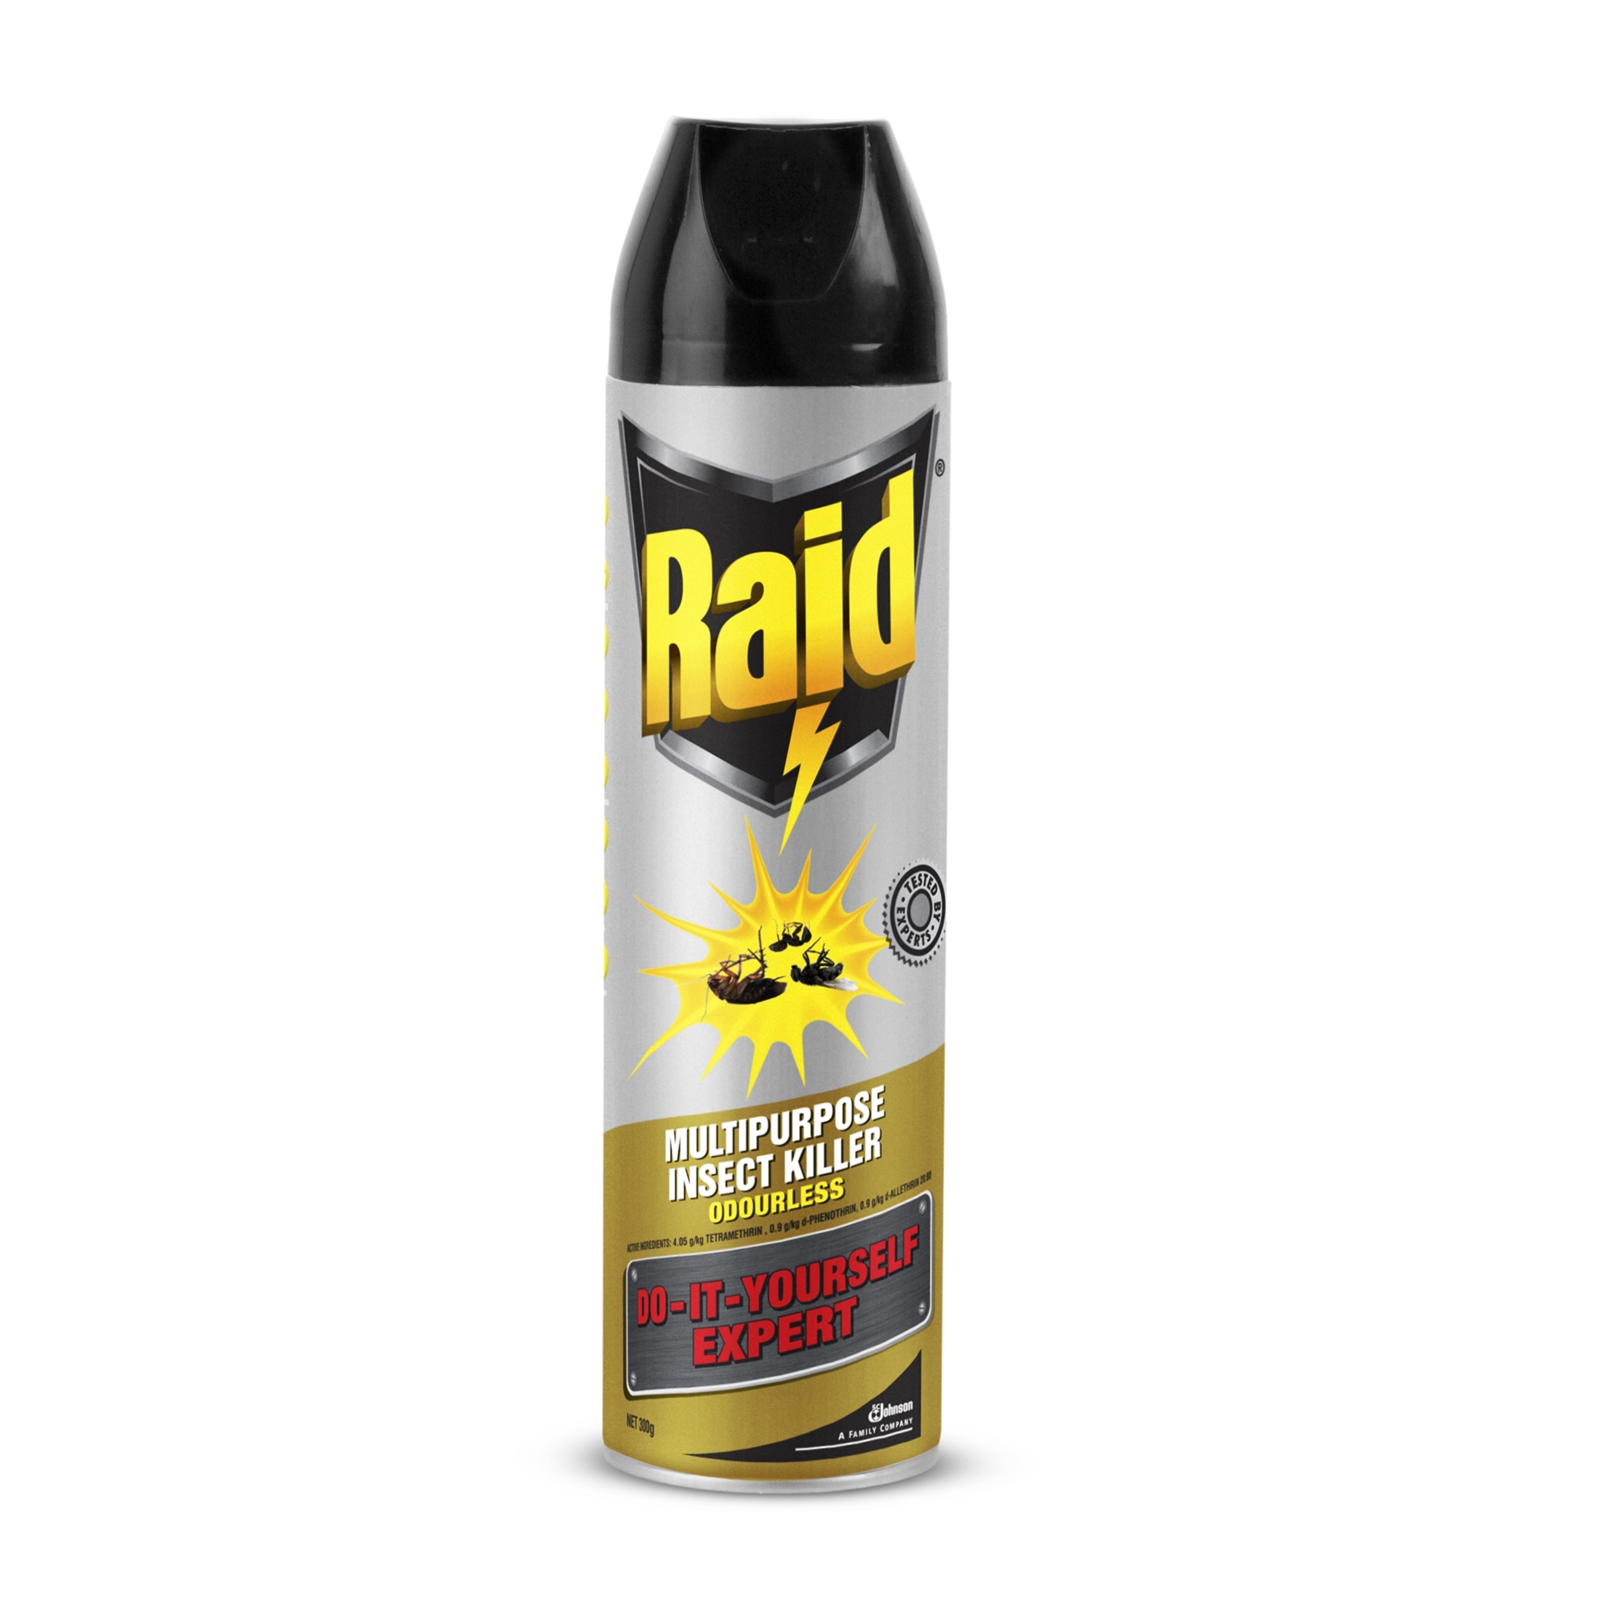 Raid 300g DIY Expert Multi Purpose Odourless Insecticide